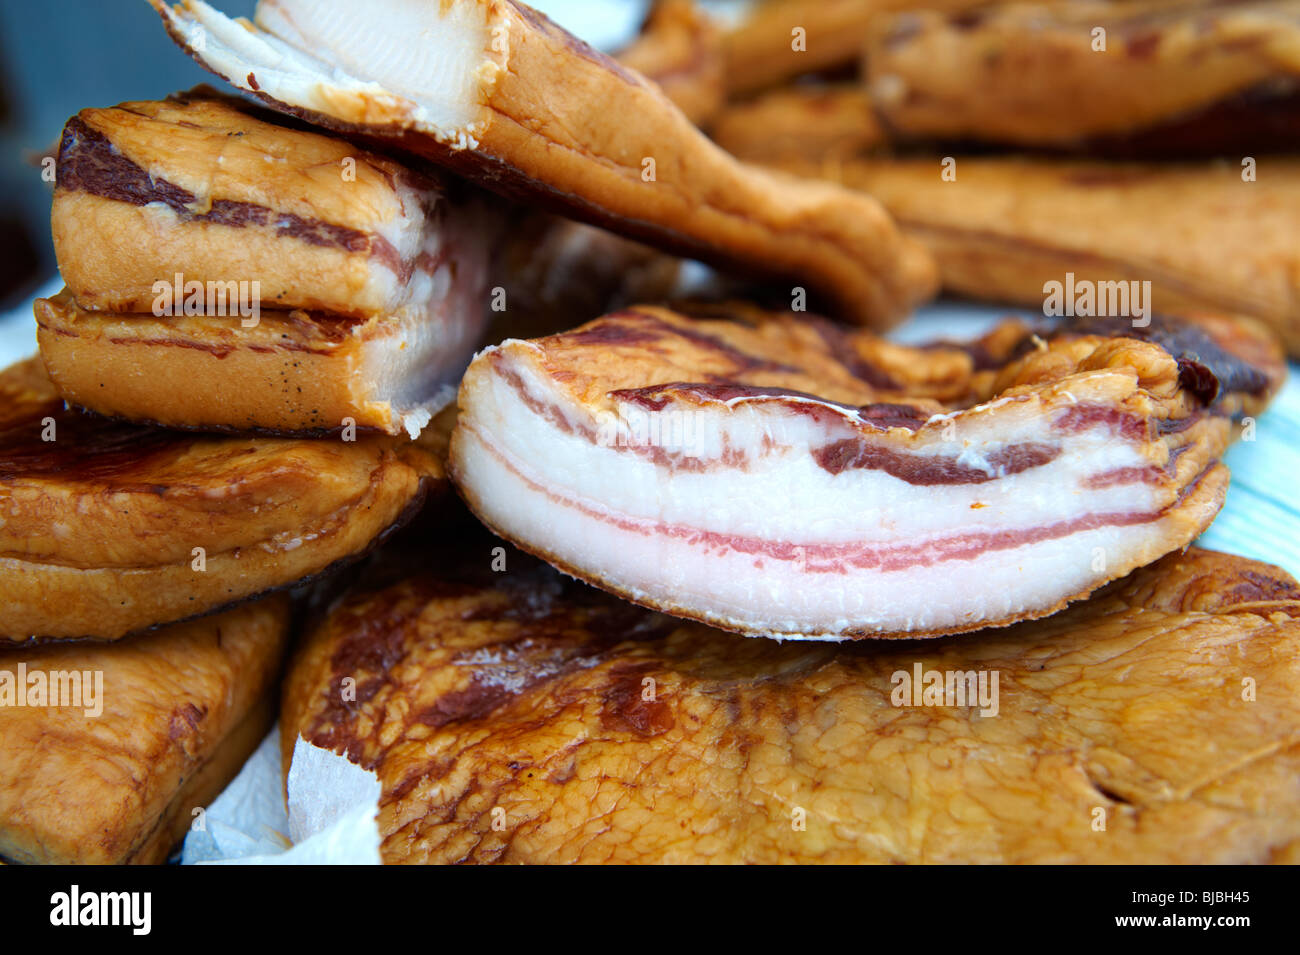 Hungarian Mangalicsa (Mangalitsa) smoked fat pig meat products. Food photos. Stock Photo